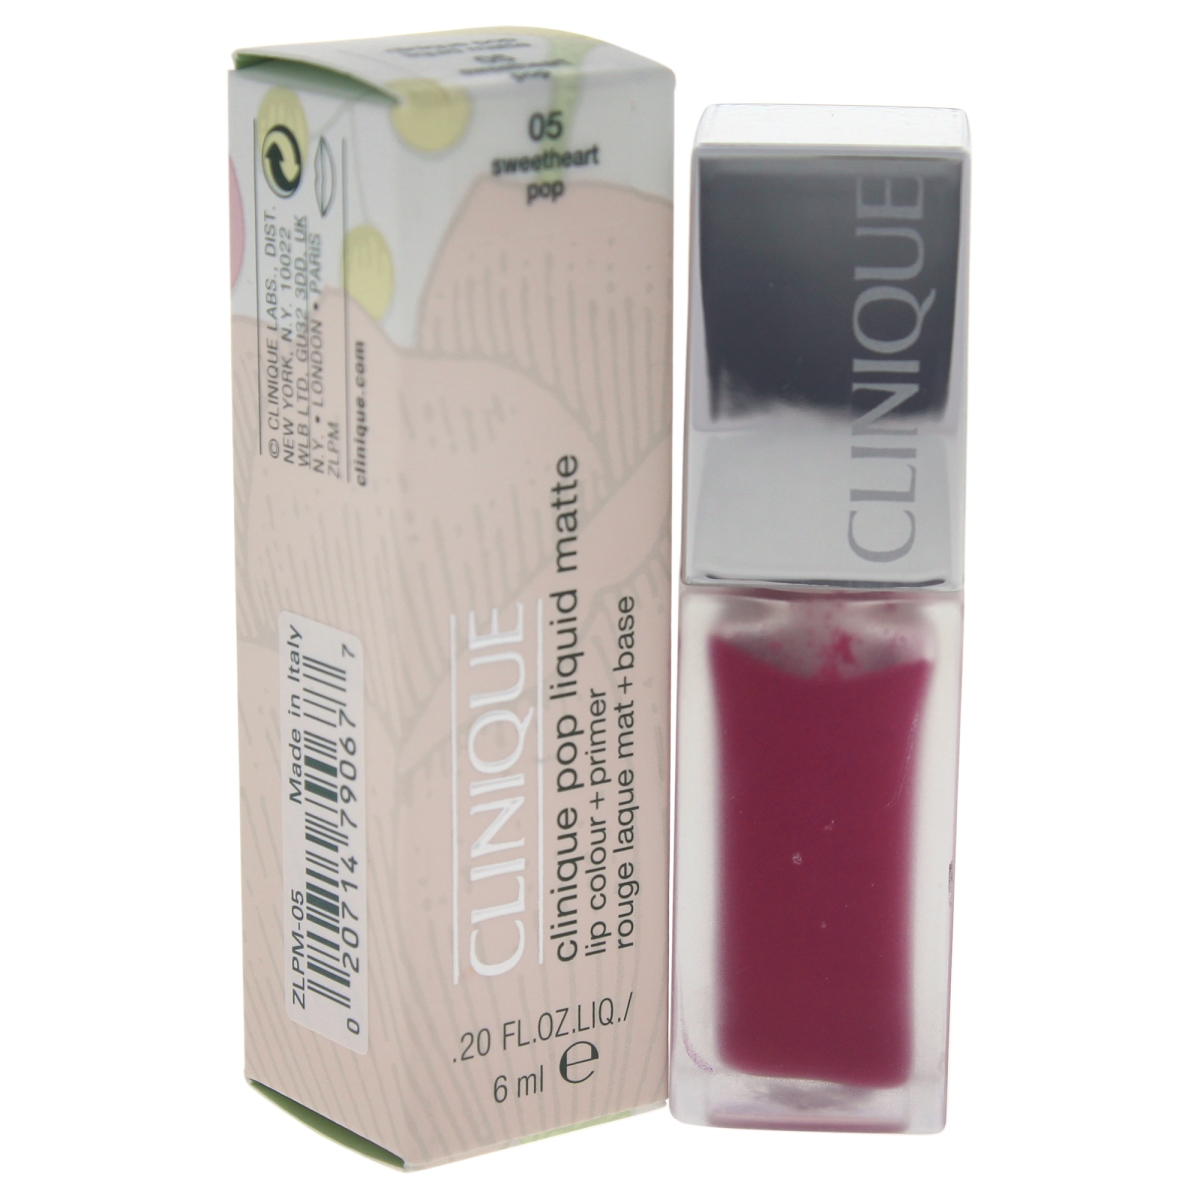 W-c-11082 0.2 Oz No. 05 Sweetheart-pop Liquid Matte Plus Prime Lip Gloss For Women